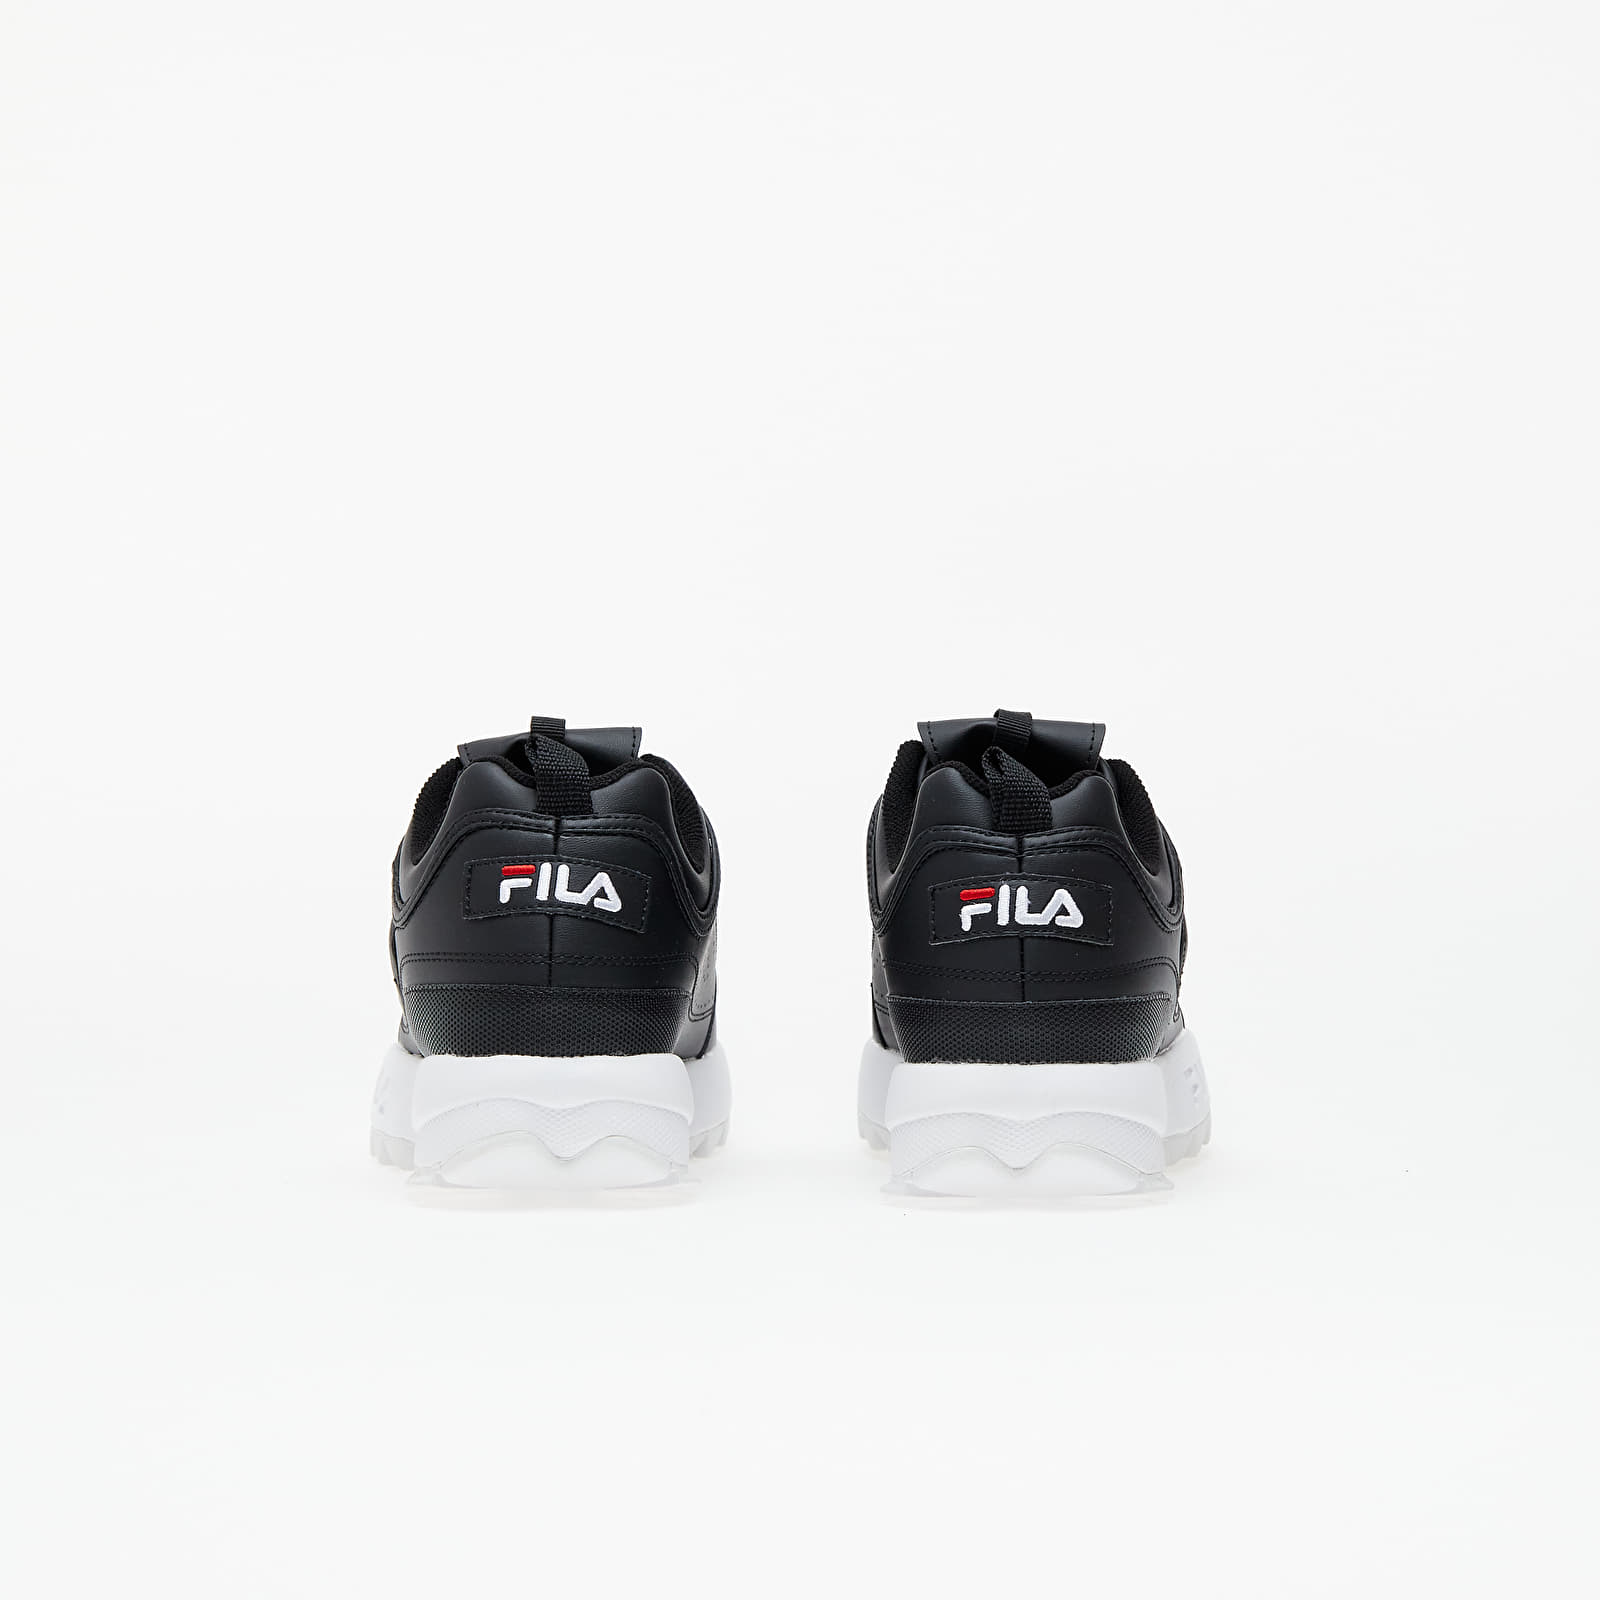  FILA Women's Disruptor wmn Sneaker, Black (Dark Black), 4 UK